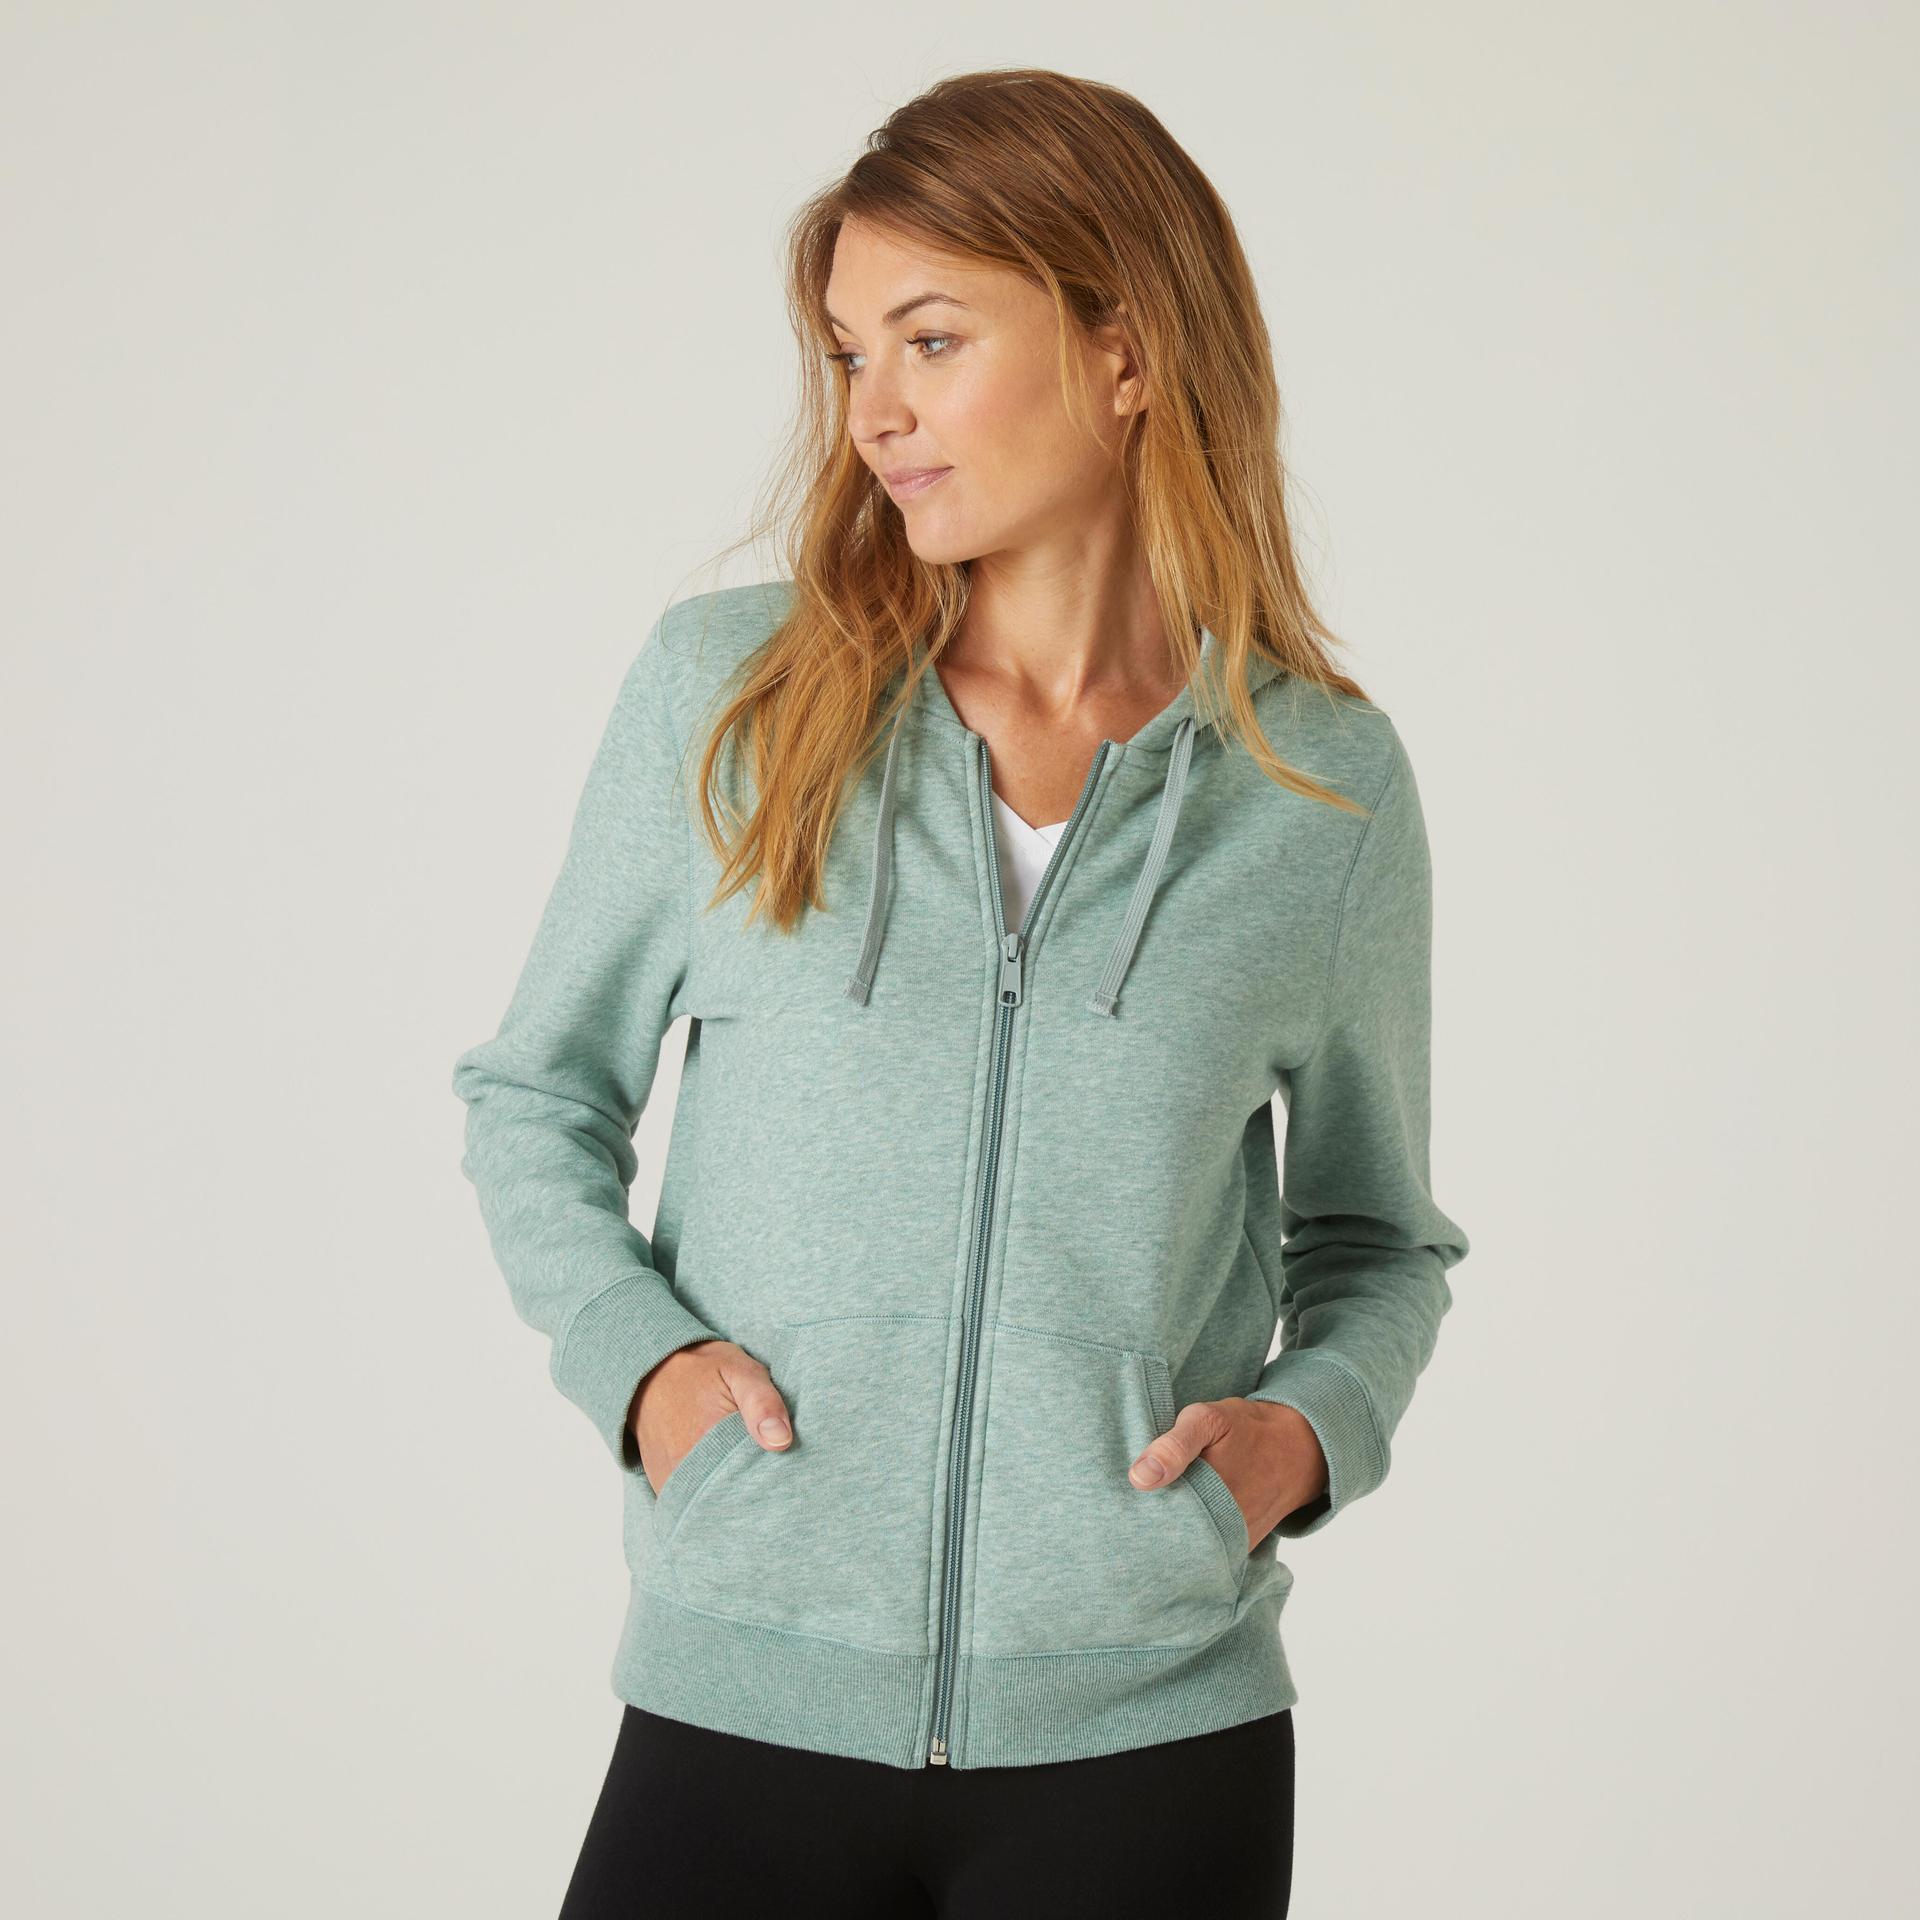 women's-gym-cotton-fleece-hoodie-zip-jacket-500-khaki